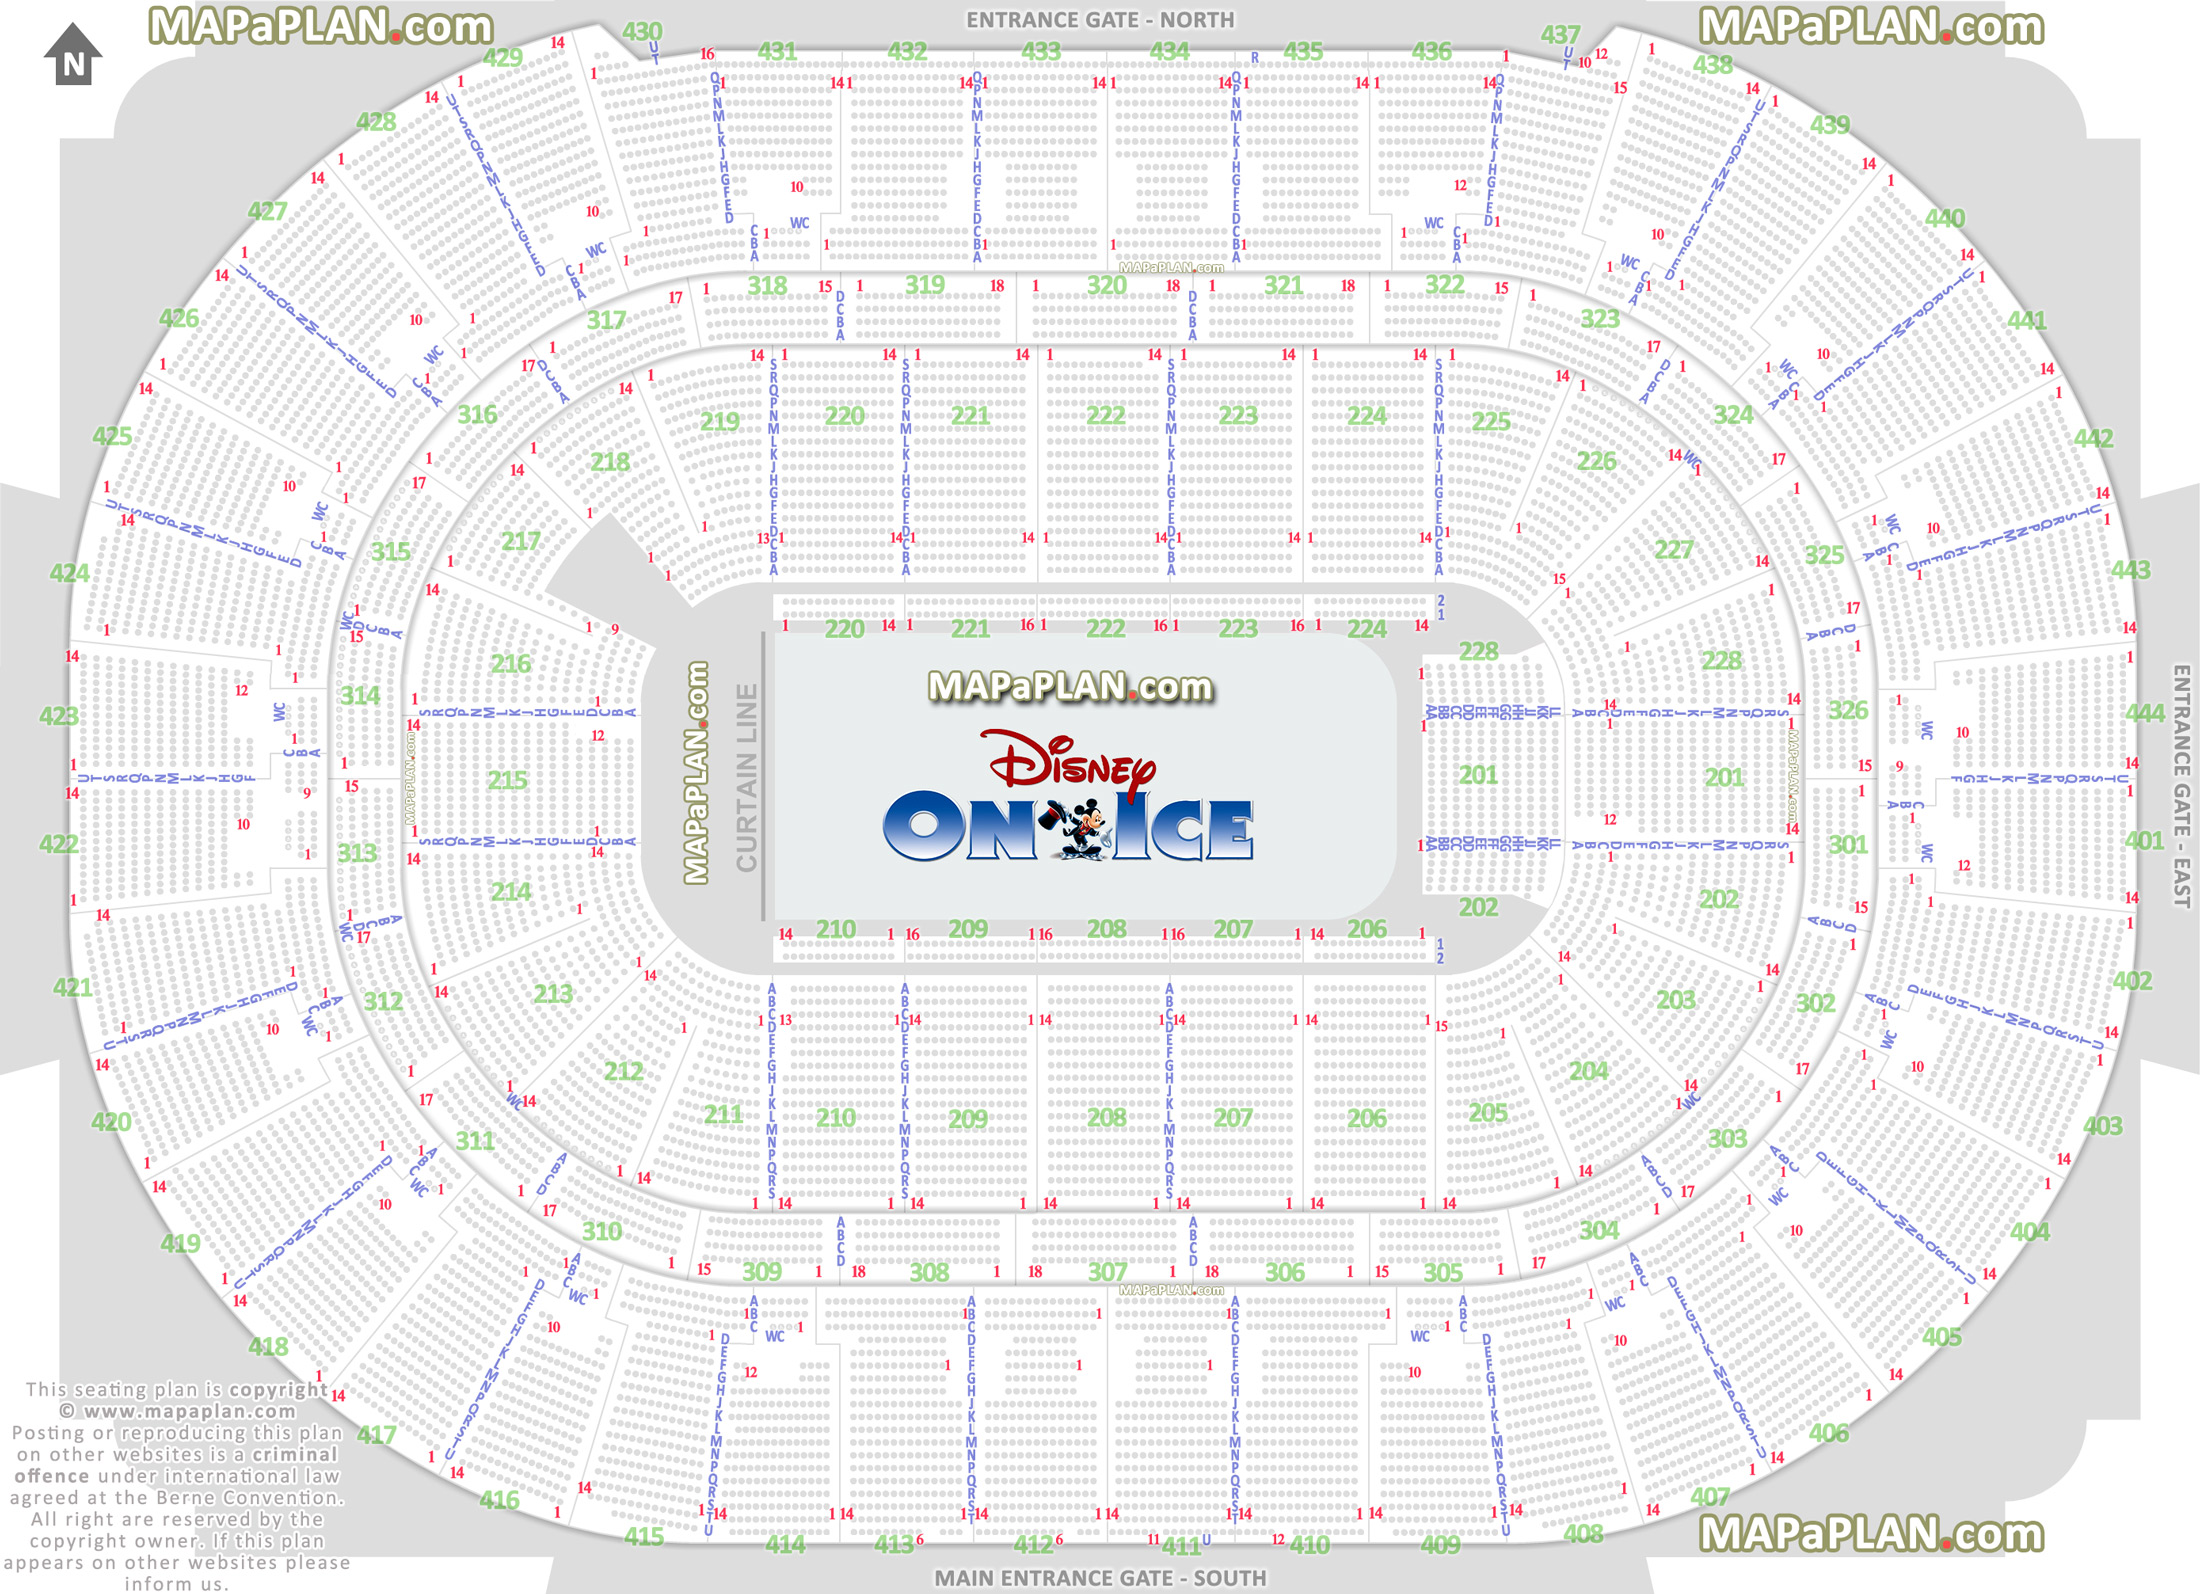 Honda Center Disney on Ice show seating arrangement